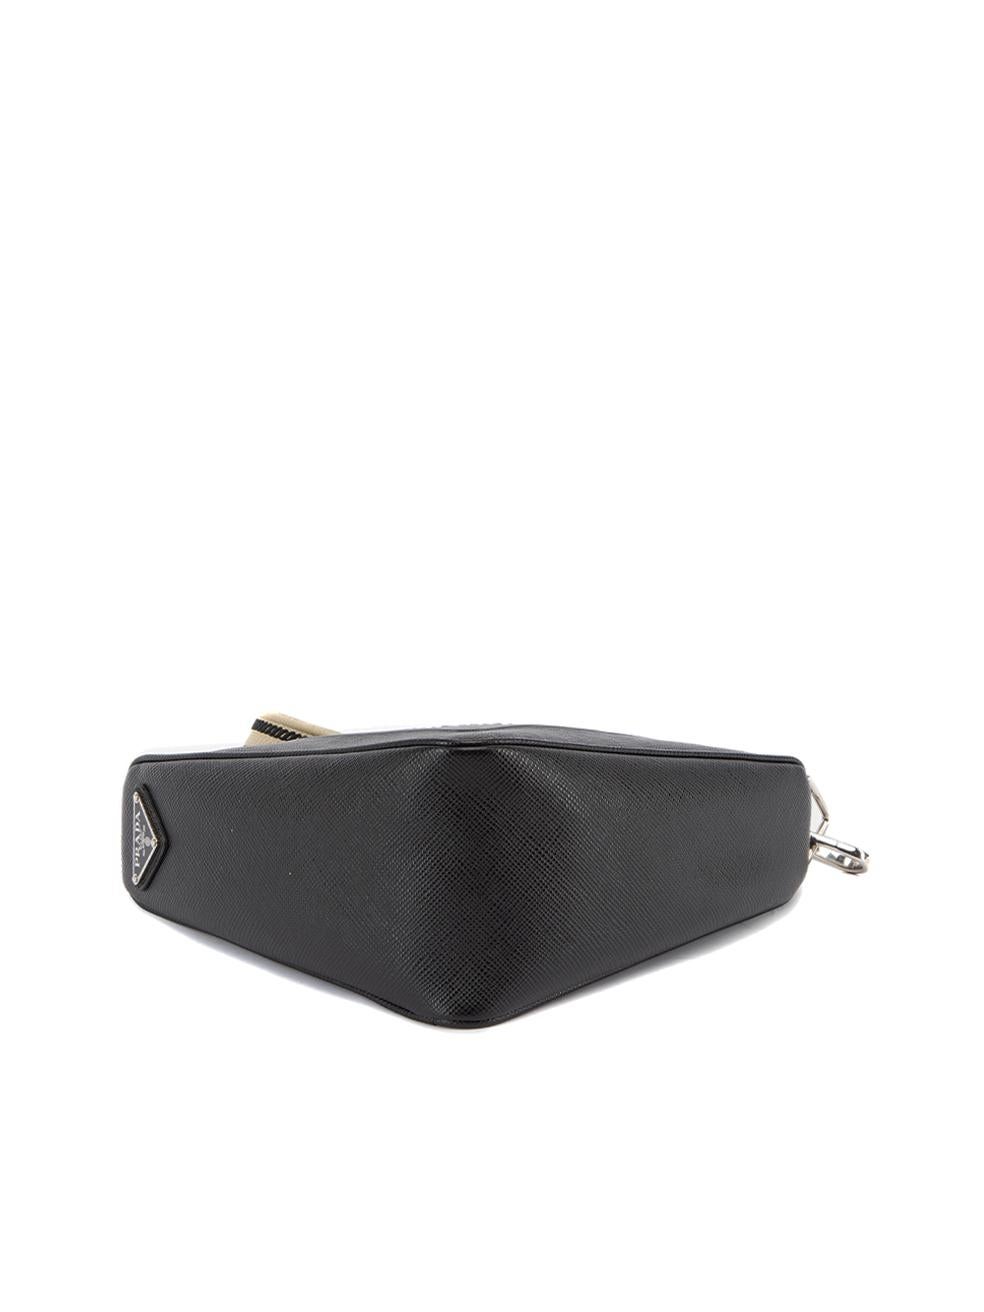 Prada Women's Black Leather Triangle Shoulder Bag 1